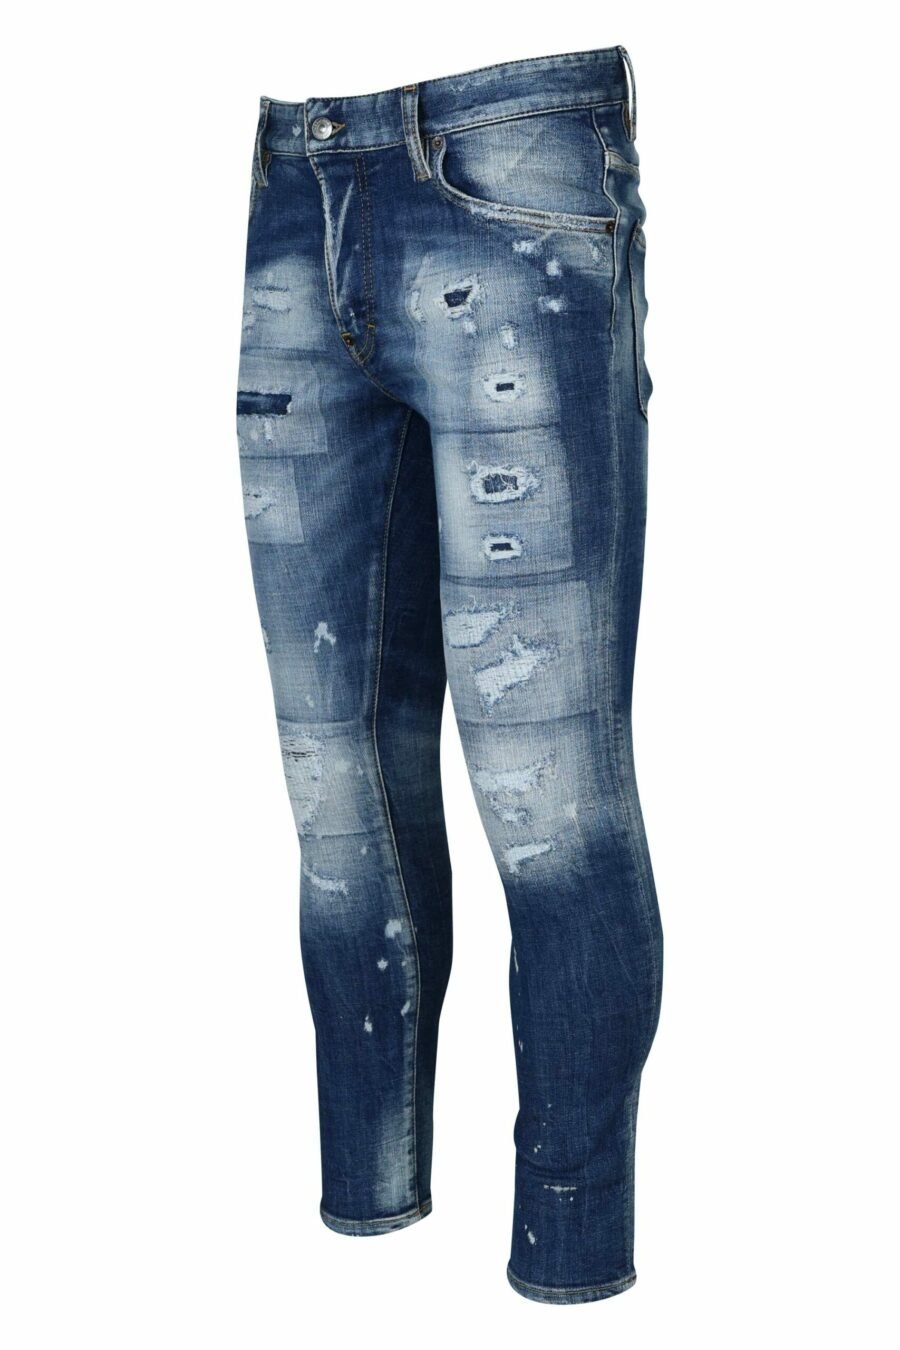 Pantalón vaquero azul "super twinky jean" desgastado con rotos - 8054148339029 1 scaled